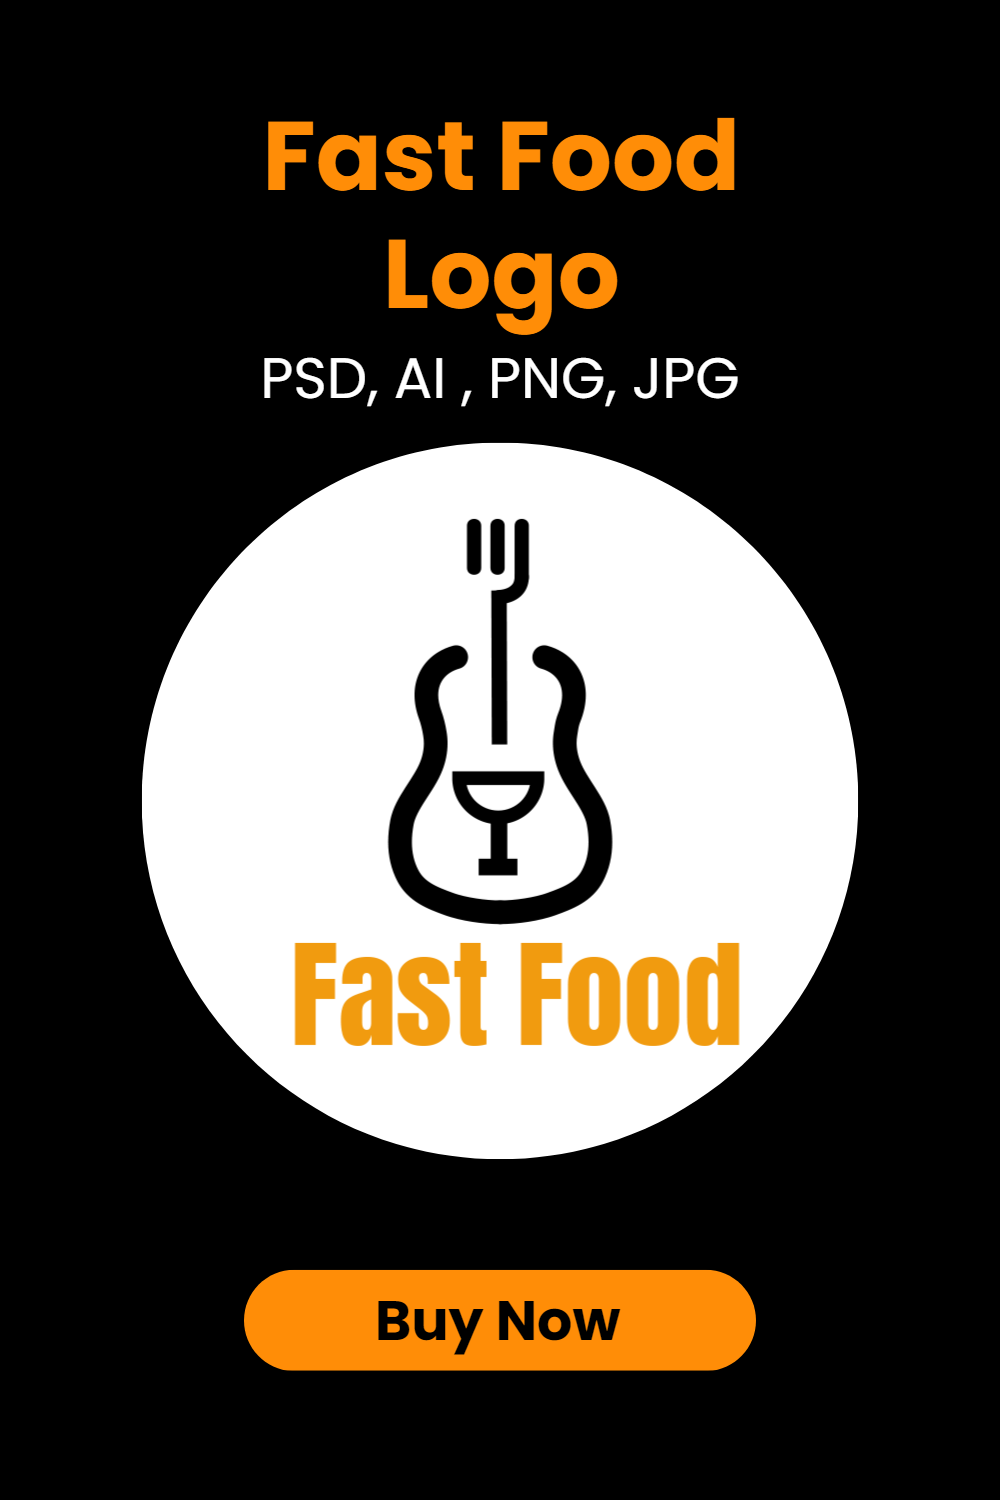 Fast Food Restaurant Logo Pinterest image.